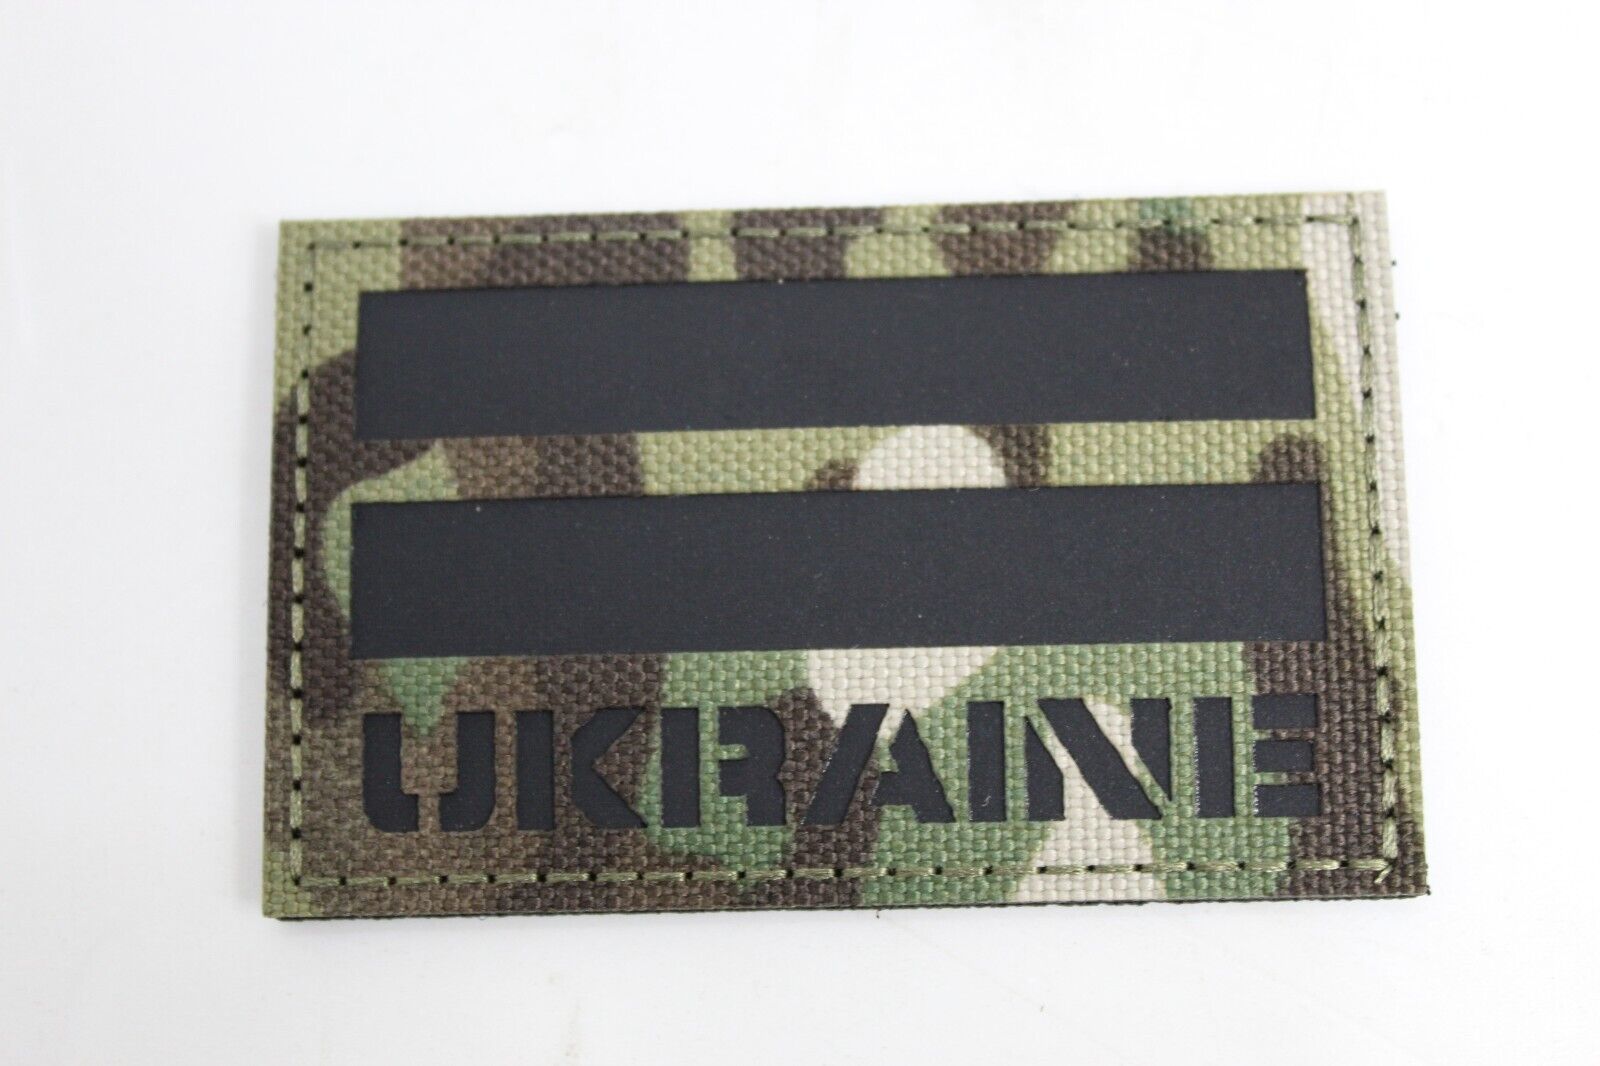 UKRAINE Badge MULTICAM Patch MTP Army Military Uniform Insignia Latest Issue